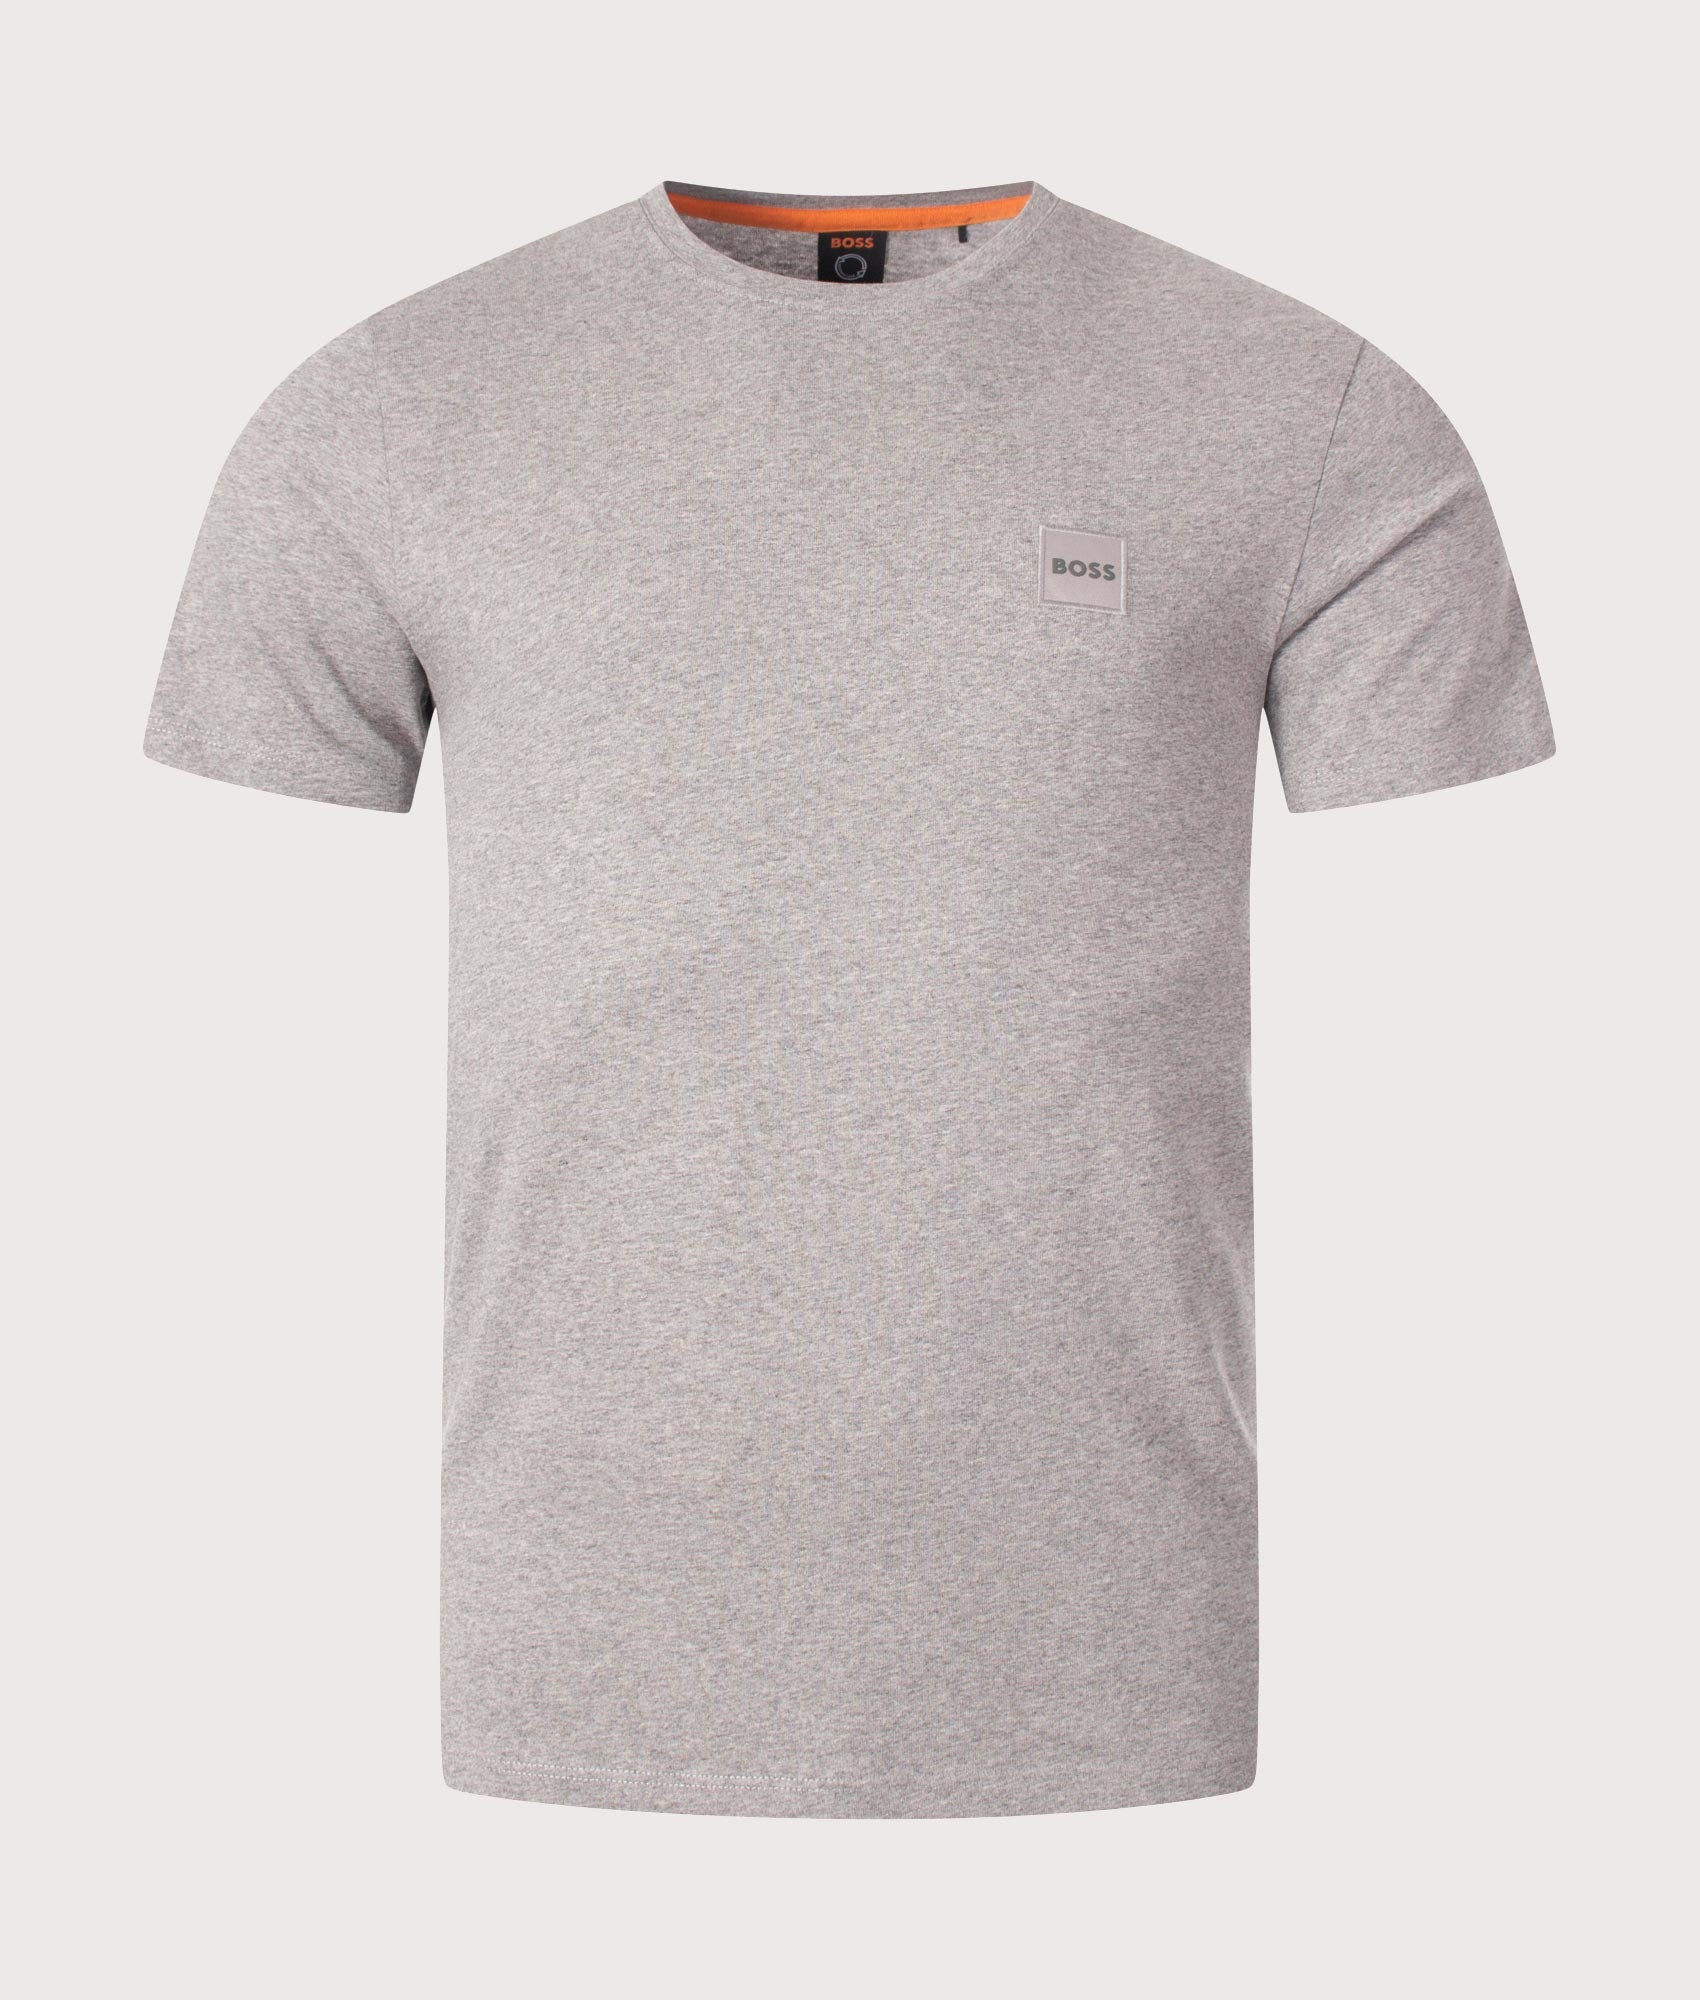 BOSS Mens Tales T-Shirt - Colour: 051 Light Pastel Grey - Size: Large